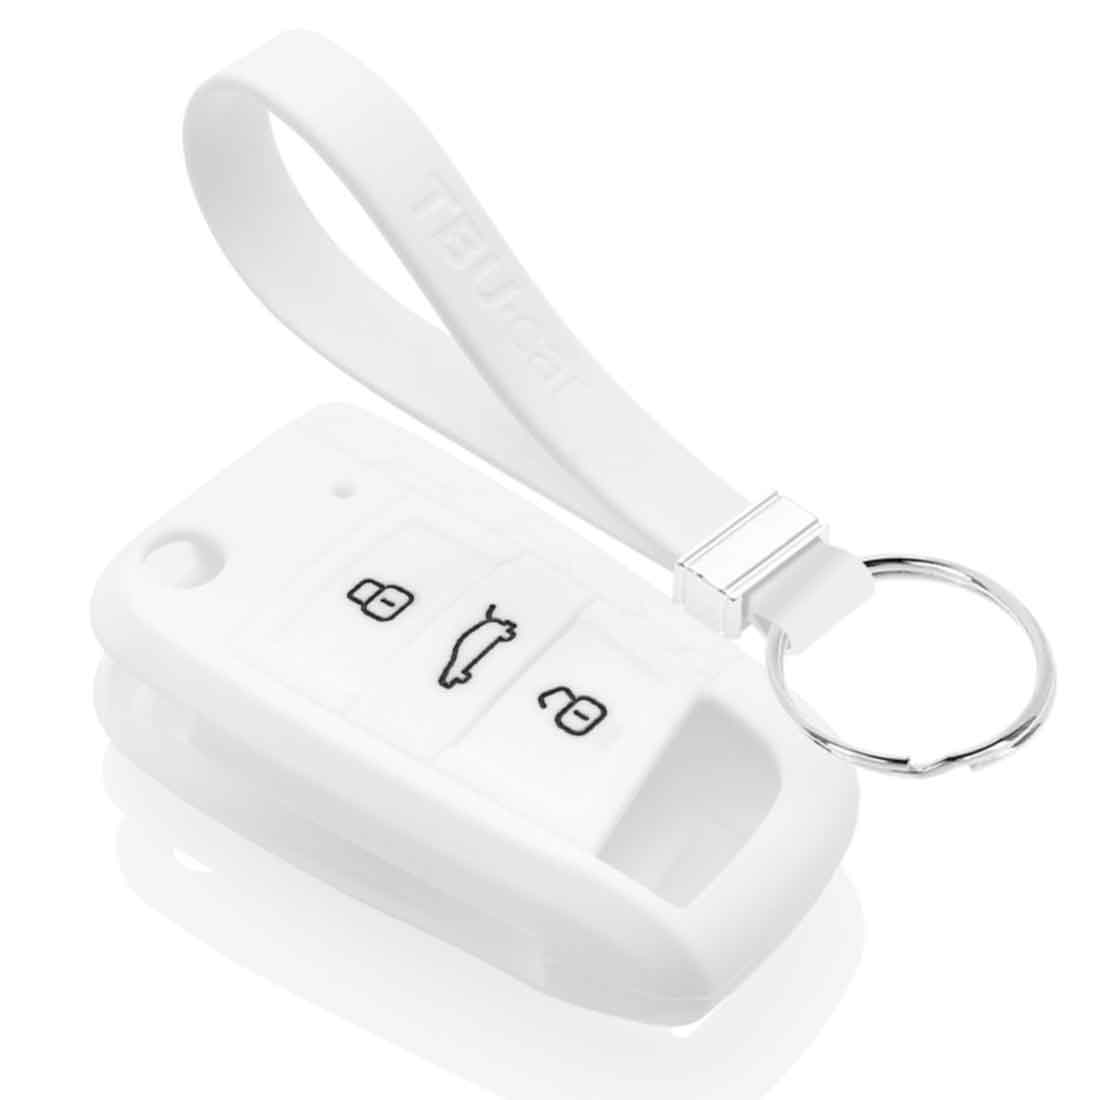 Hülle für VW Golf 8 Autoschlüssel Silikon Schutzhülle Schlüssel